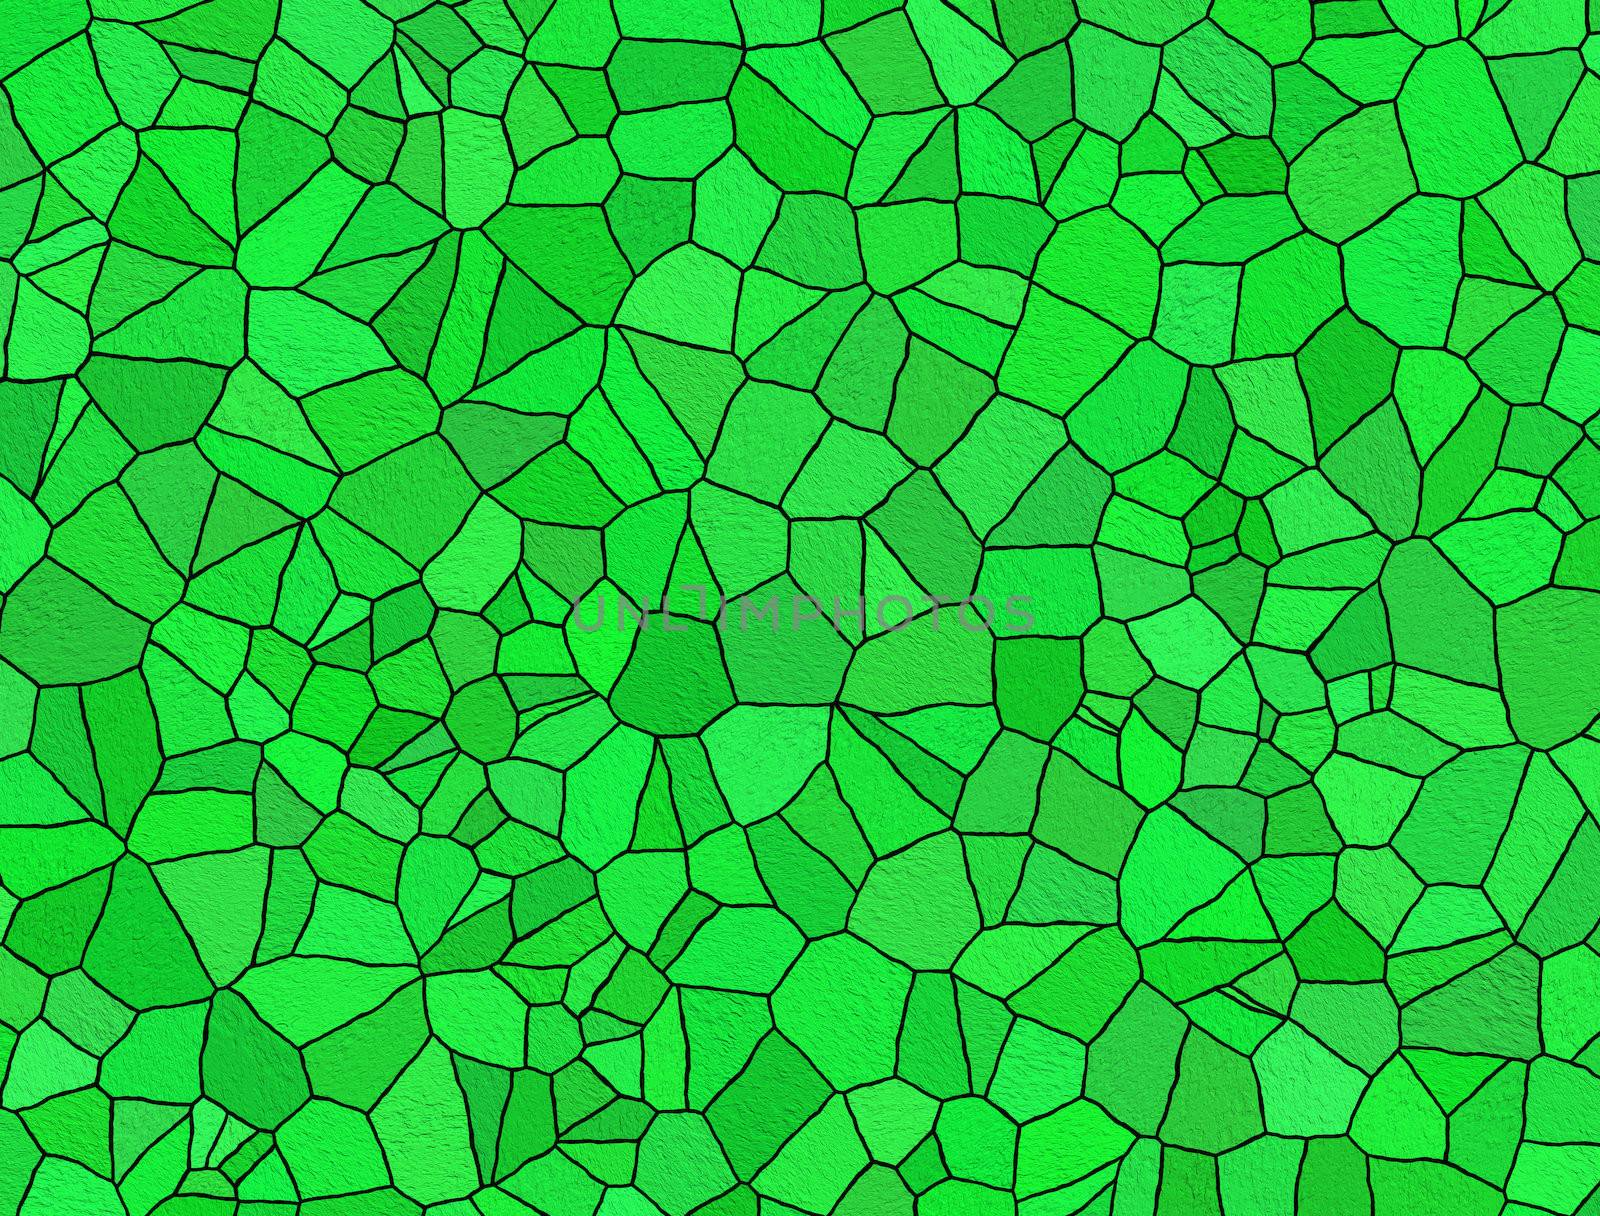 Broken tiles green pattern